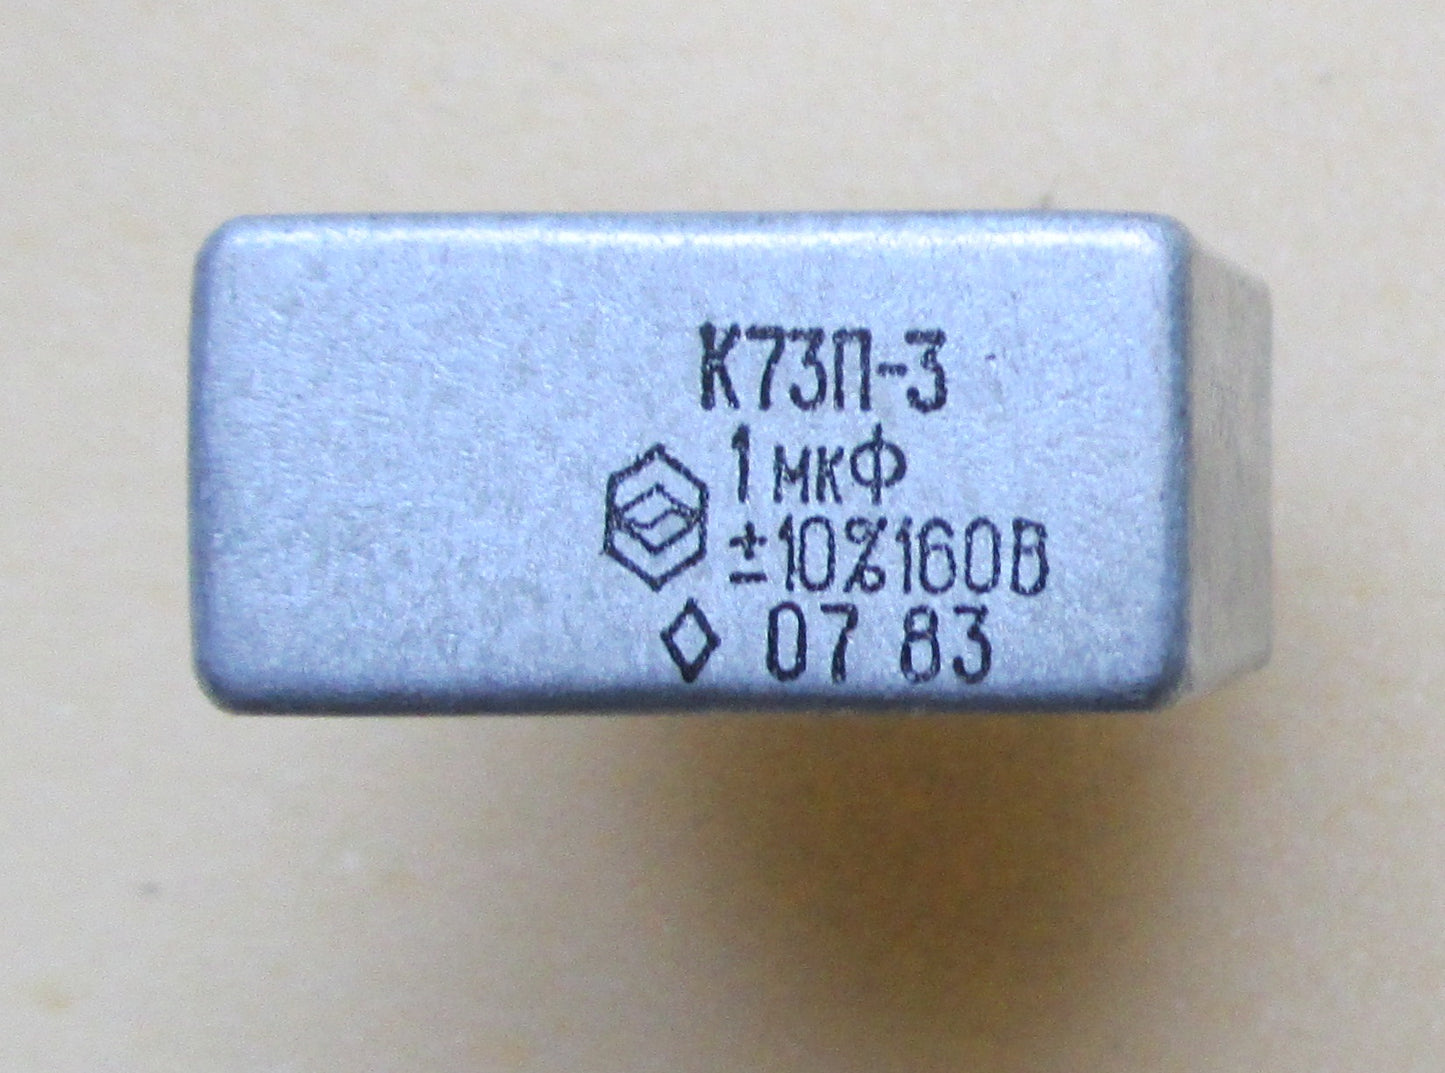 K73P-3 Polyethylene Terephthalate Capacitors